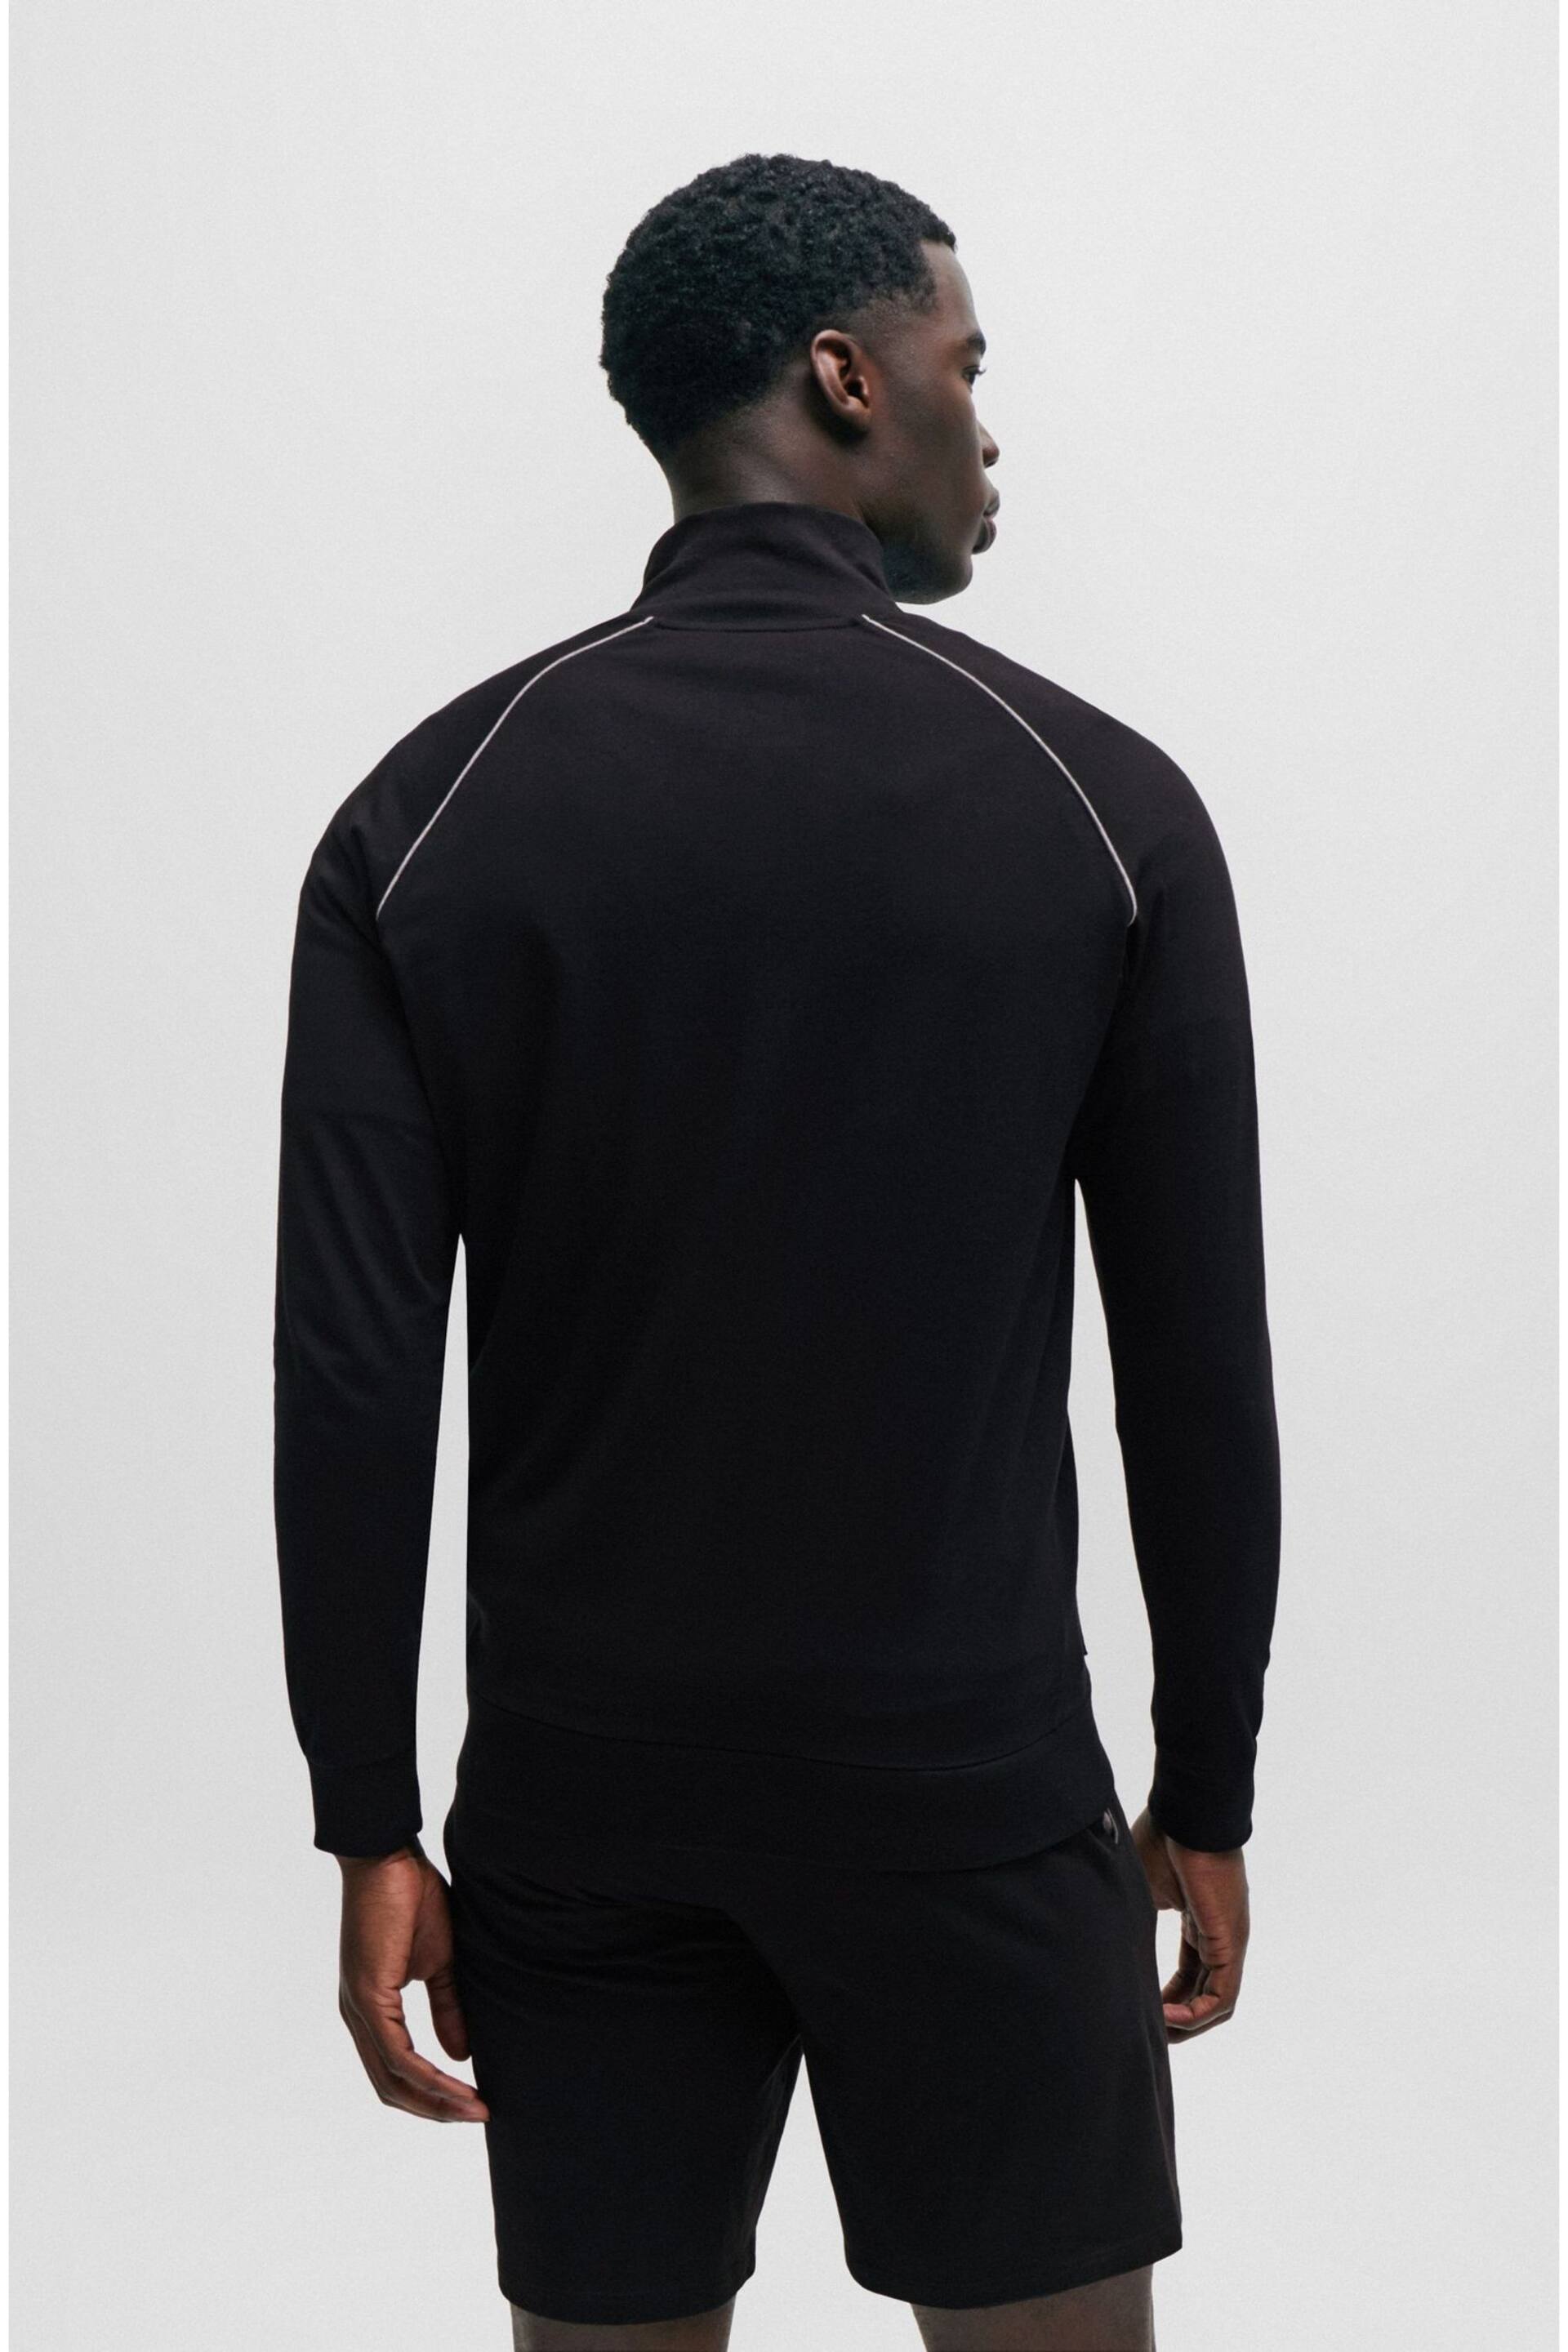 BOSS Black Zip Up Stretch Cotton Sweatshirt - Image 2 of 5